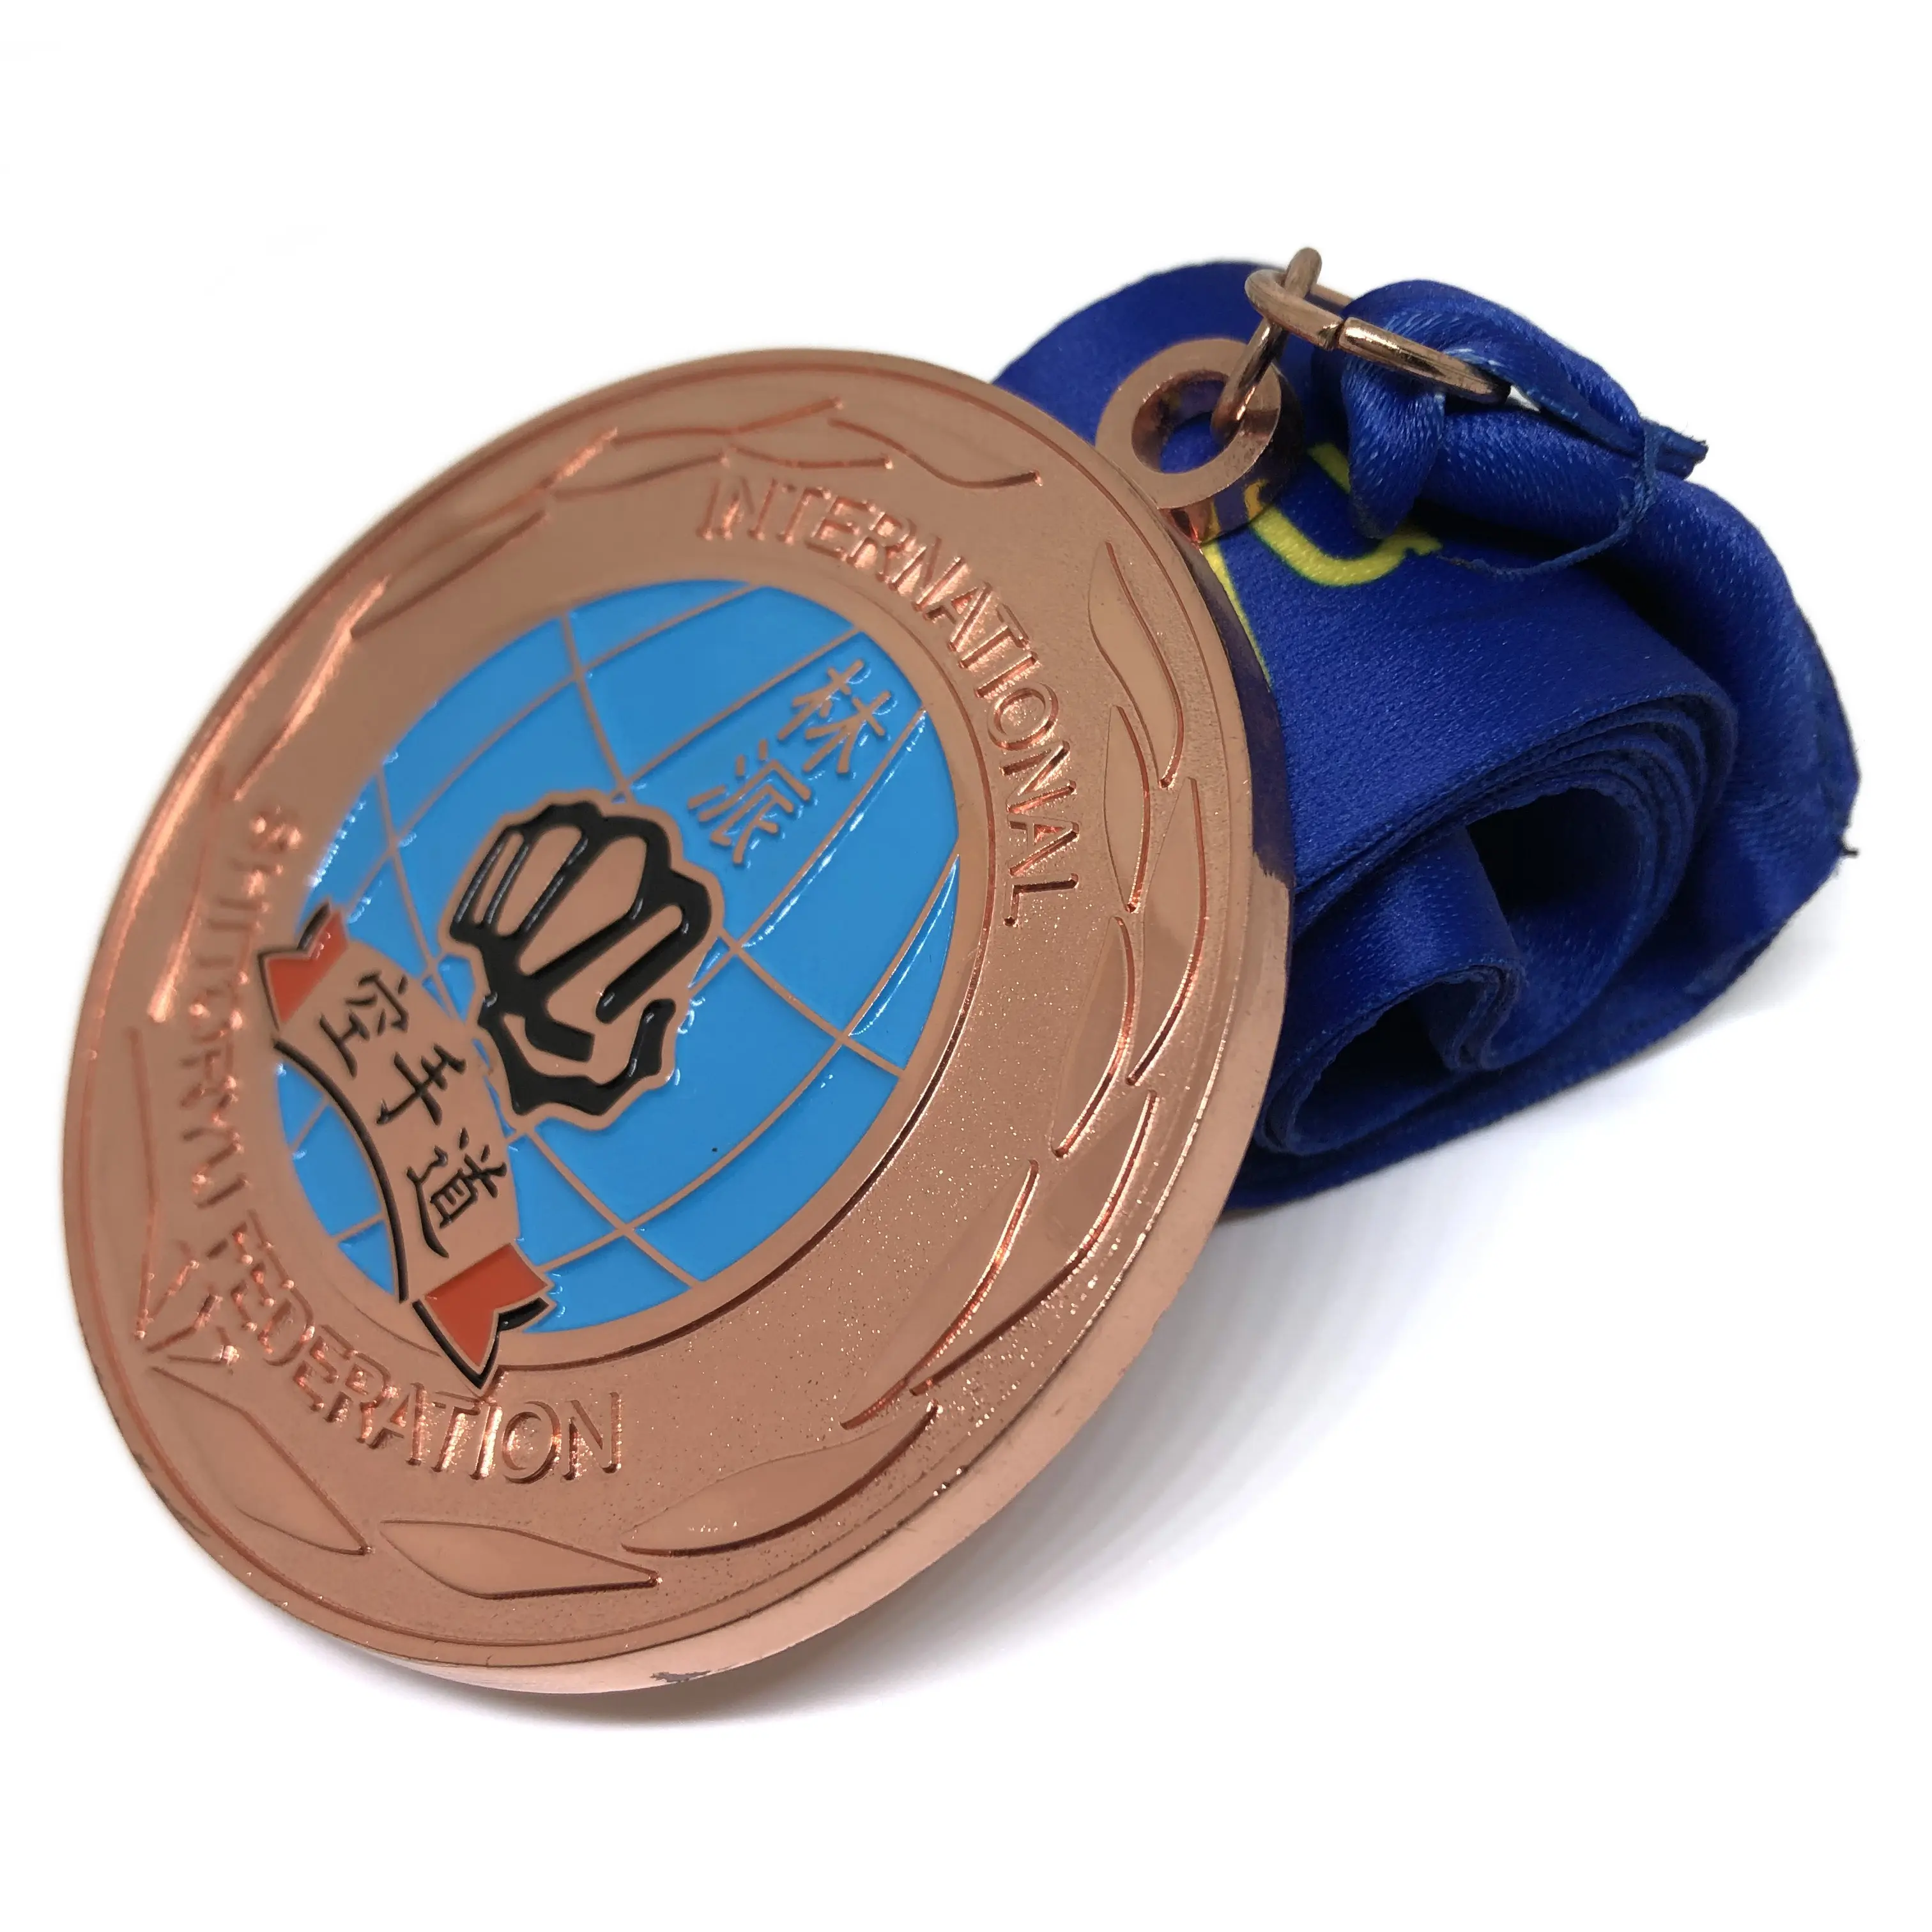 Medalla de Metal rosa dorada personalizada, Taekwondo Internacional, kárate, puño de carrera, cadena con cinta